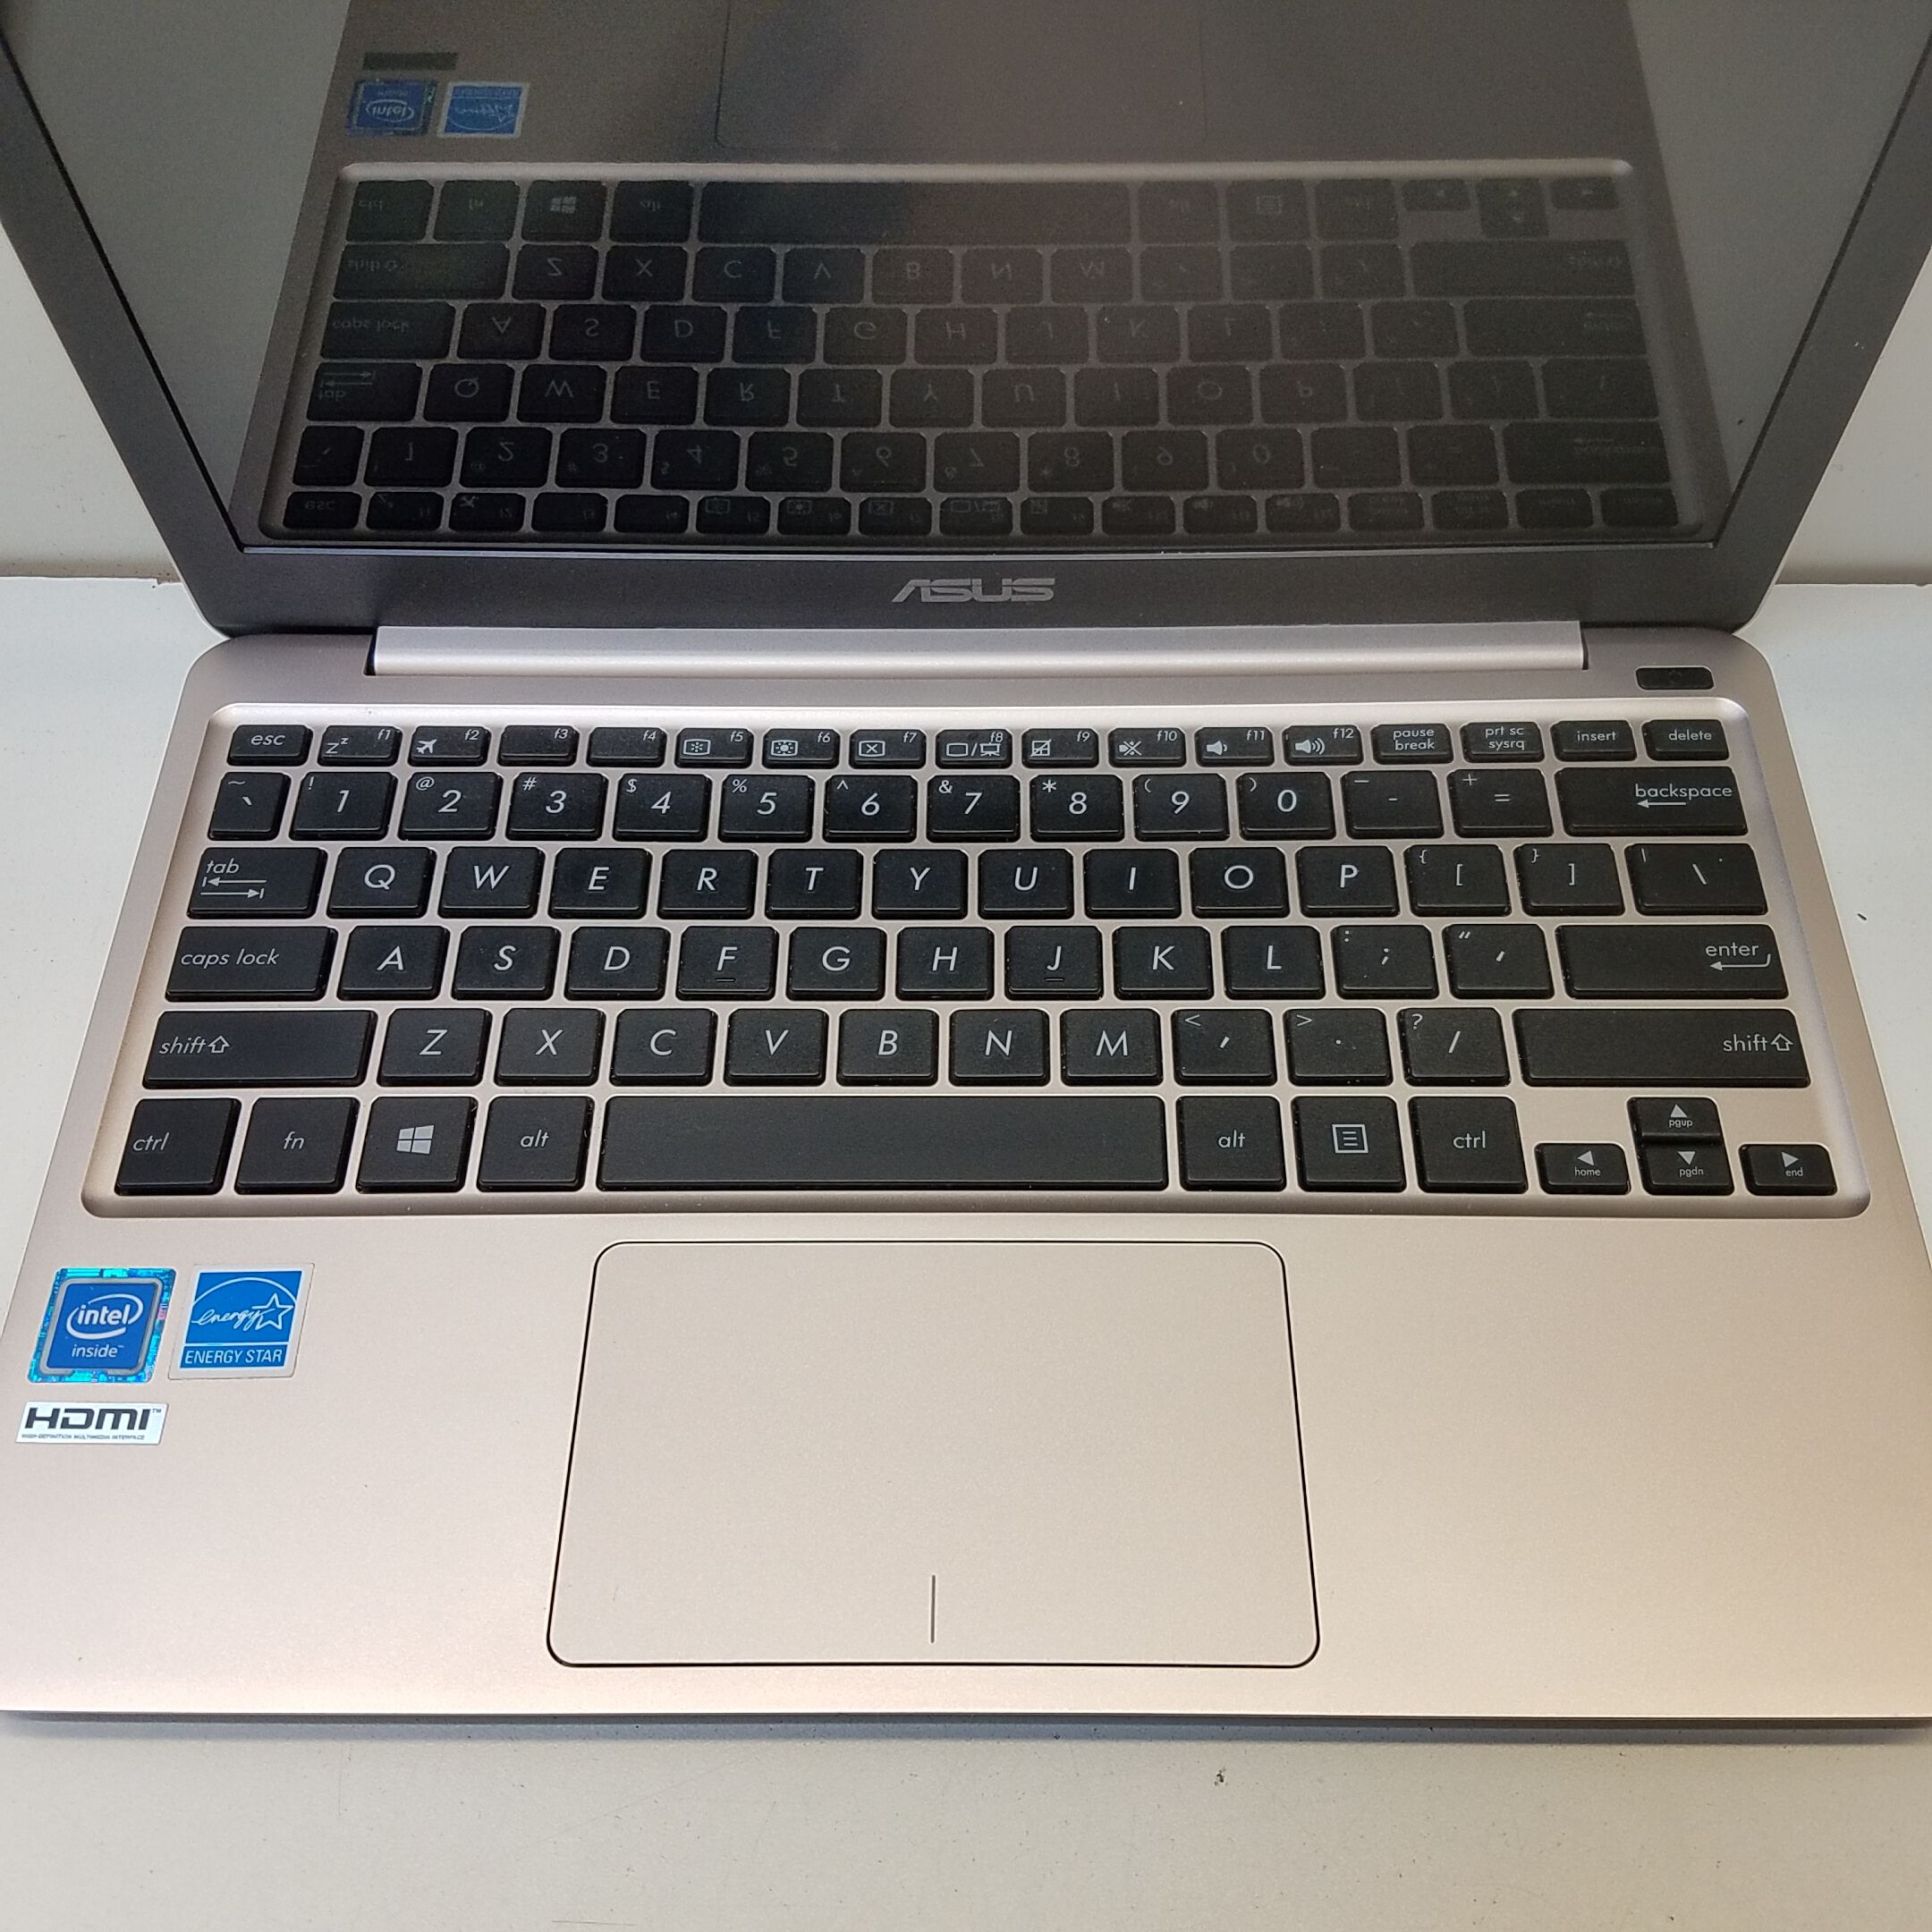 ASUS Notebook-E Series E200 11.6-in PC Windows 10